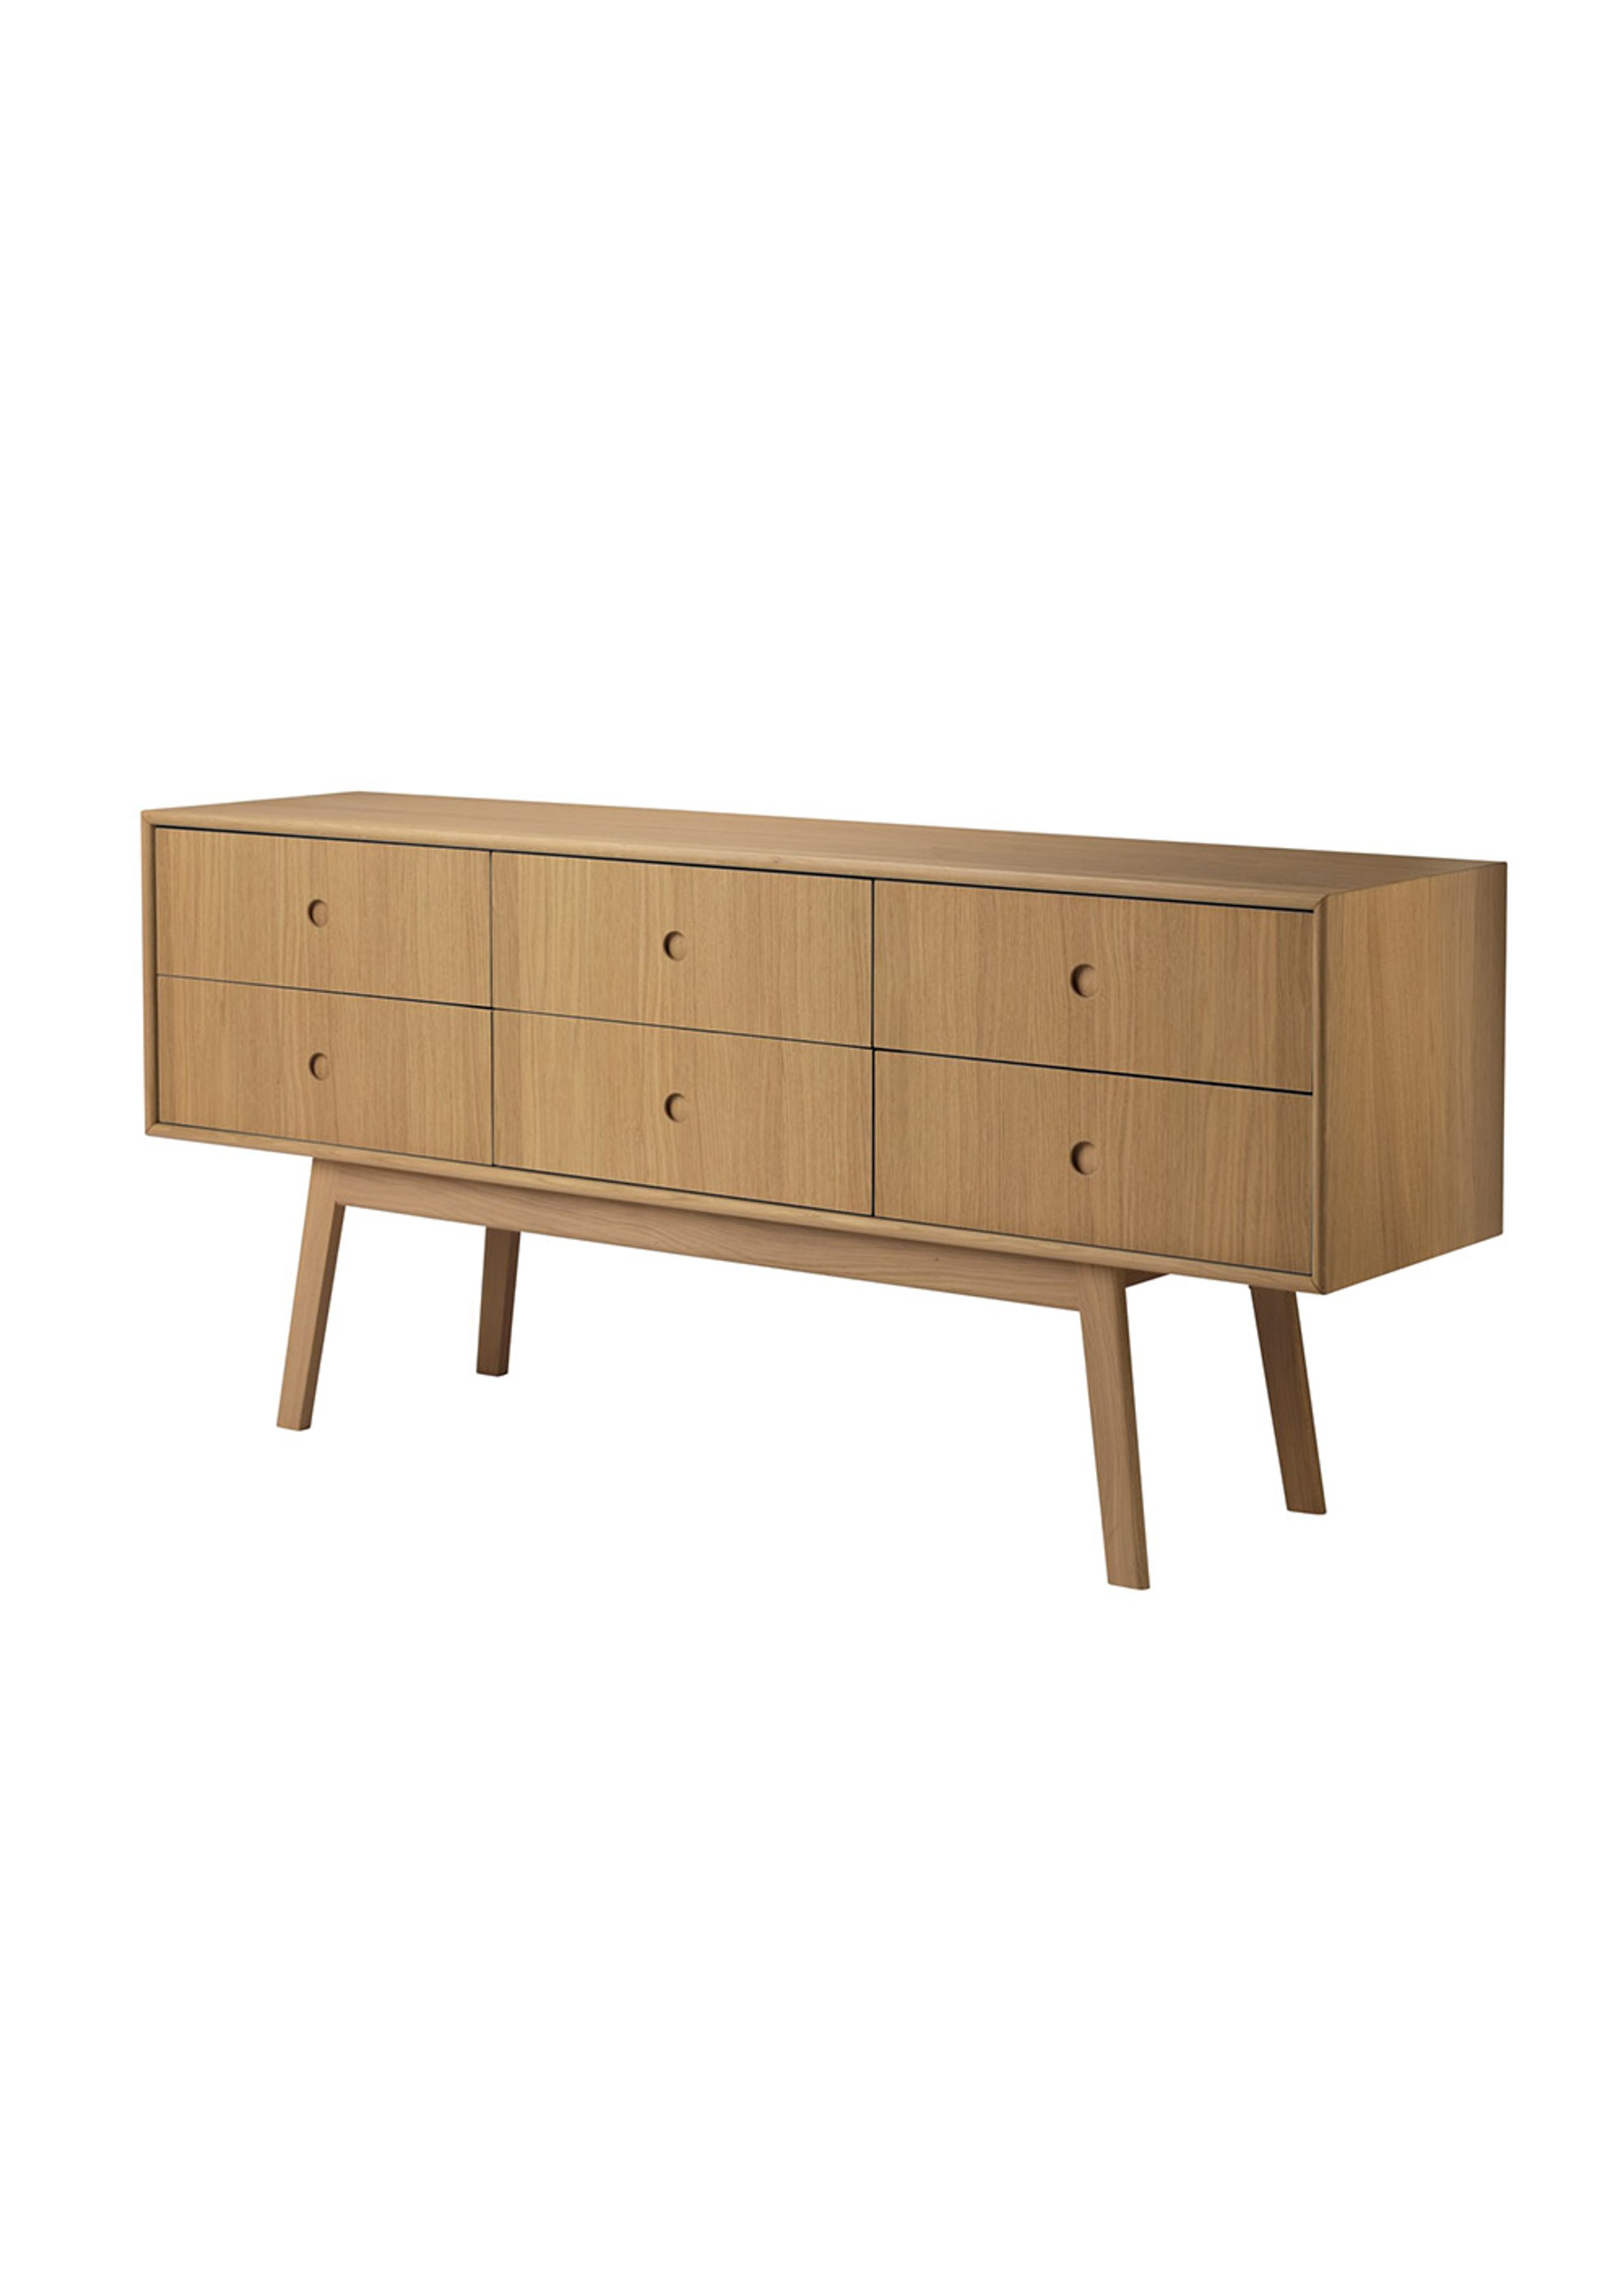 FDB Møbler / Furniture - Sideboard - A86 Butler by Foersom & Hiort-Lorenzen - Nature